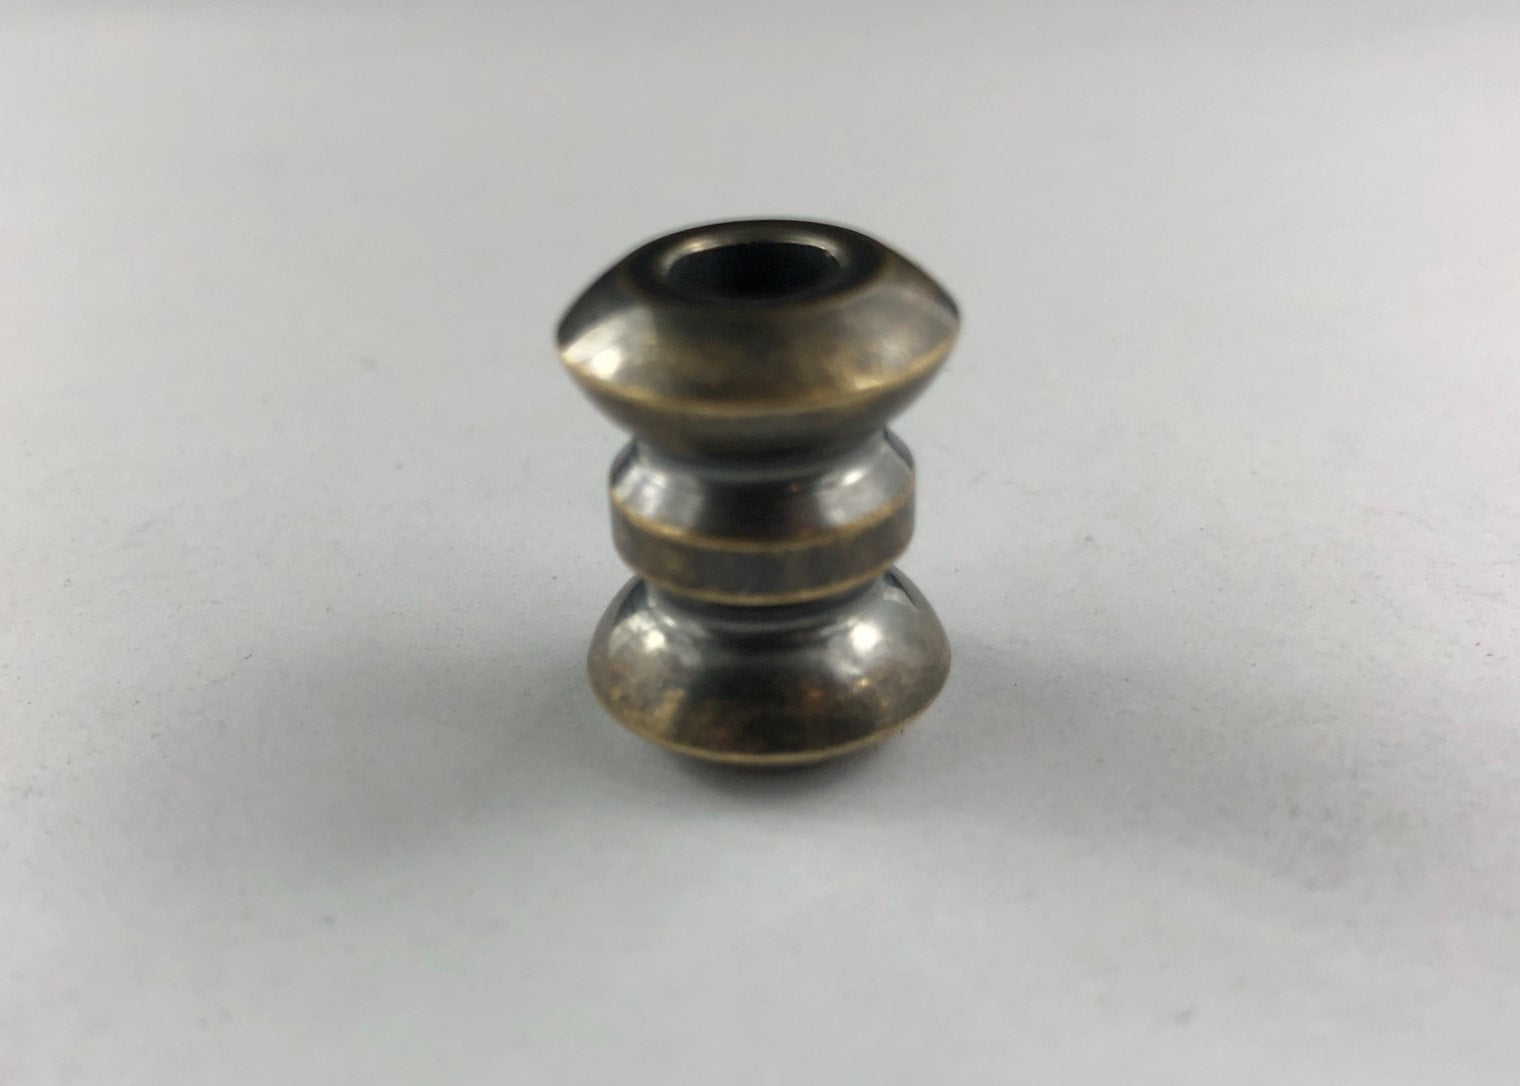 Antiqued Brass Bowtie Lanyard Bead